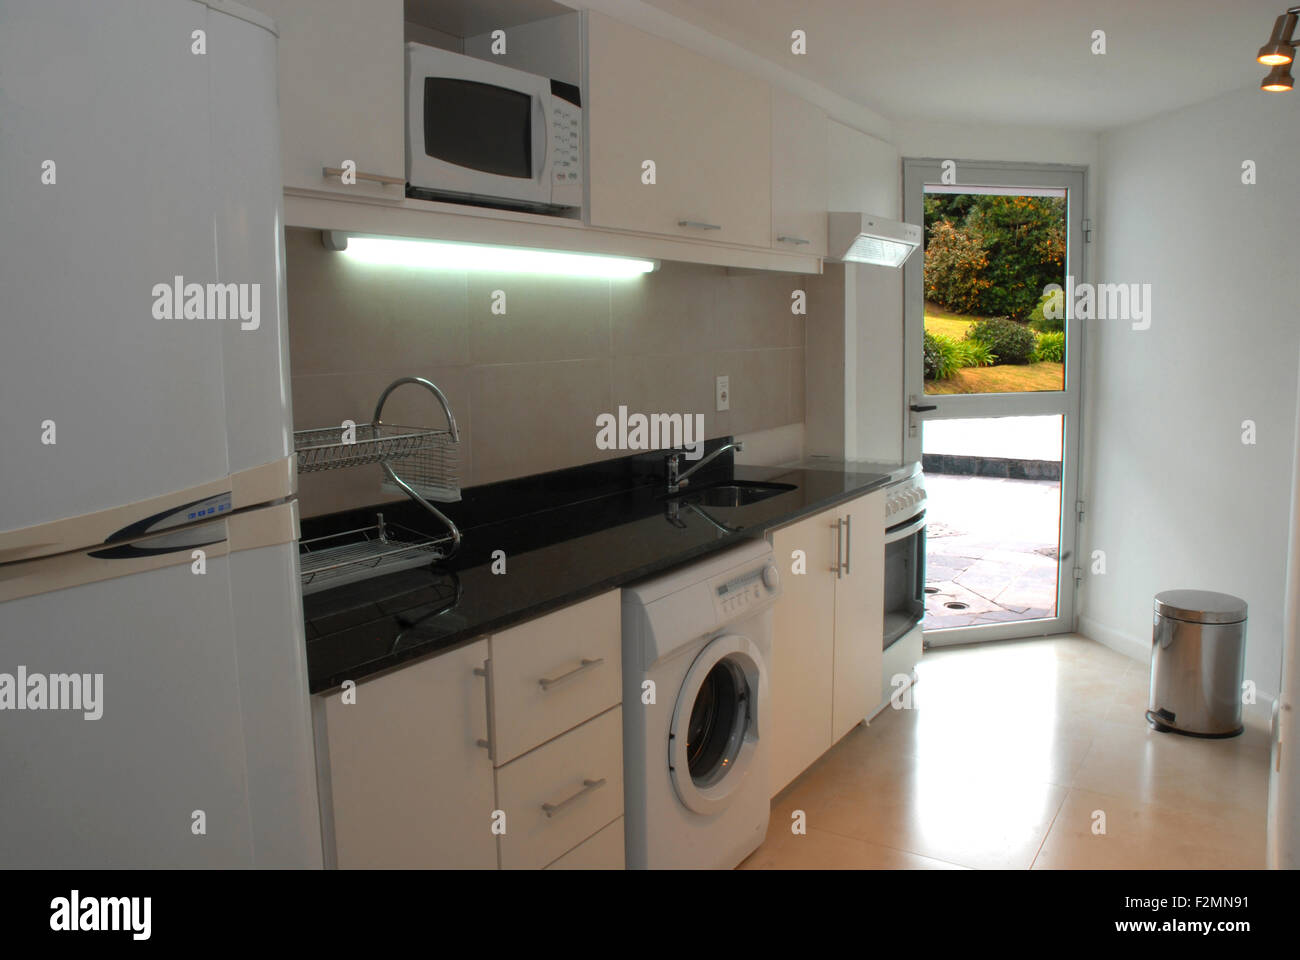 Modern kitchen with outdoor garden view contemporary style interior design. Stock Photo